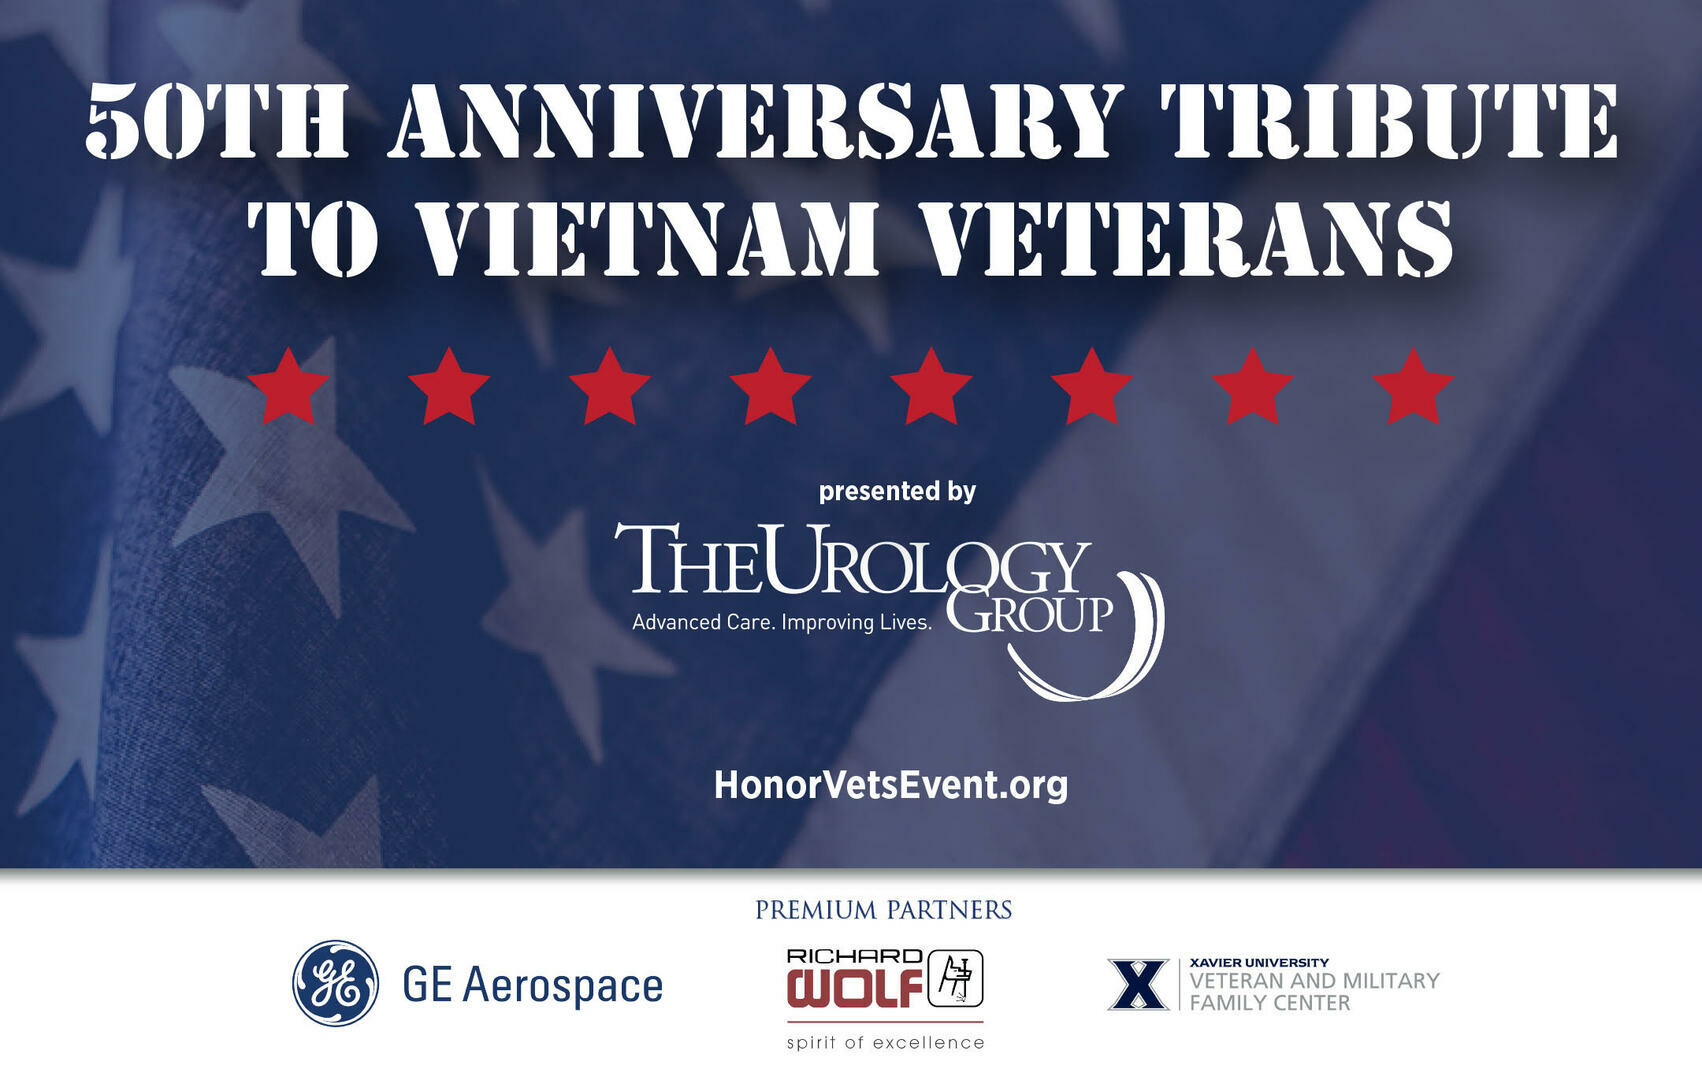 50th Anniversary Tribute to Vietnam Veterans, Cincinnati, Ohio, United States